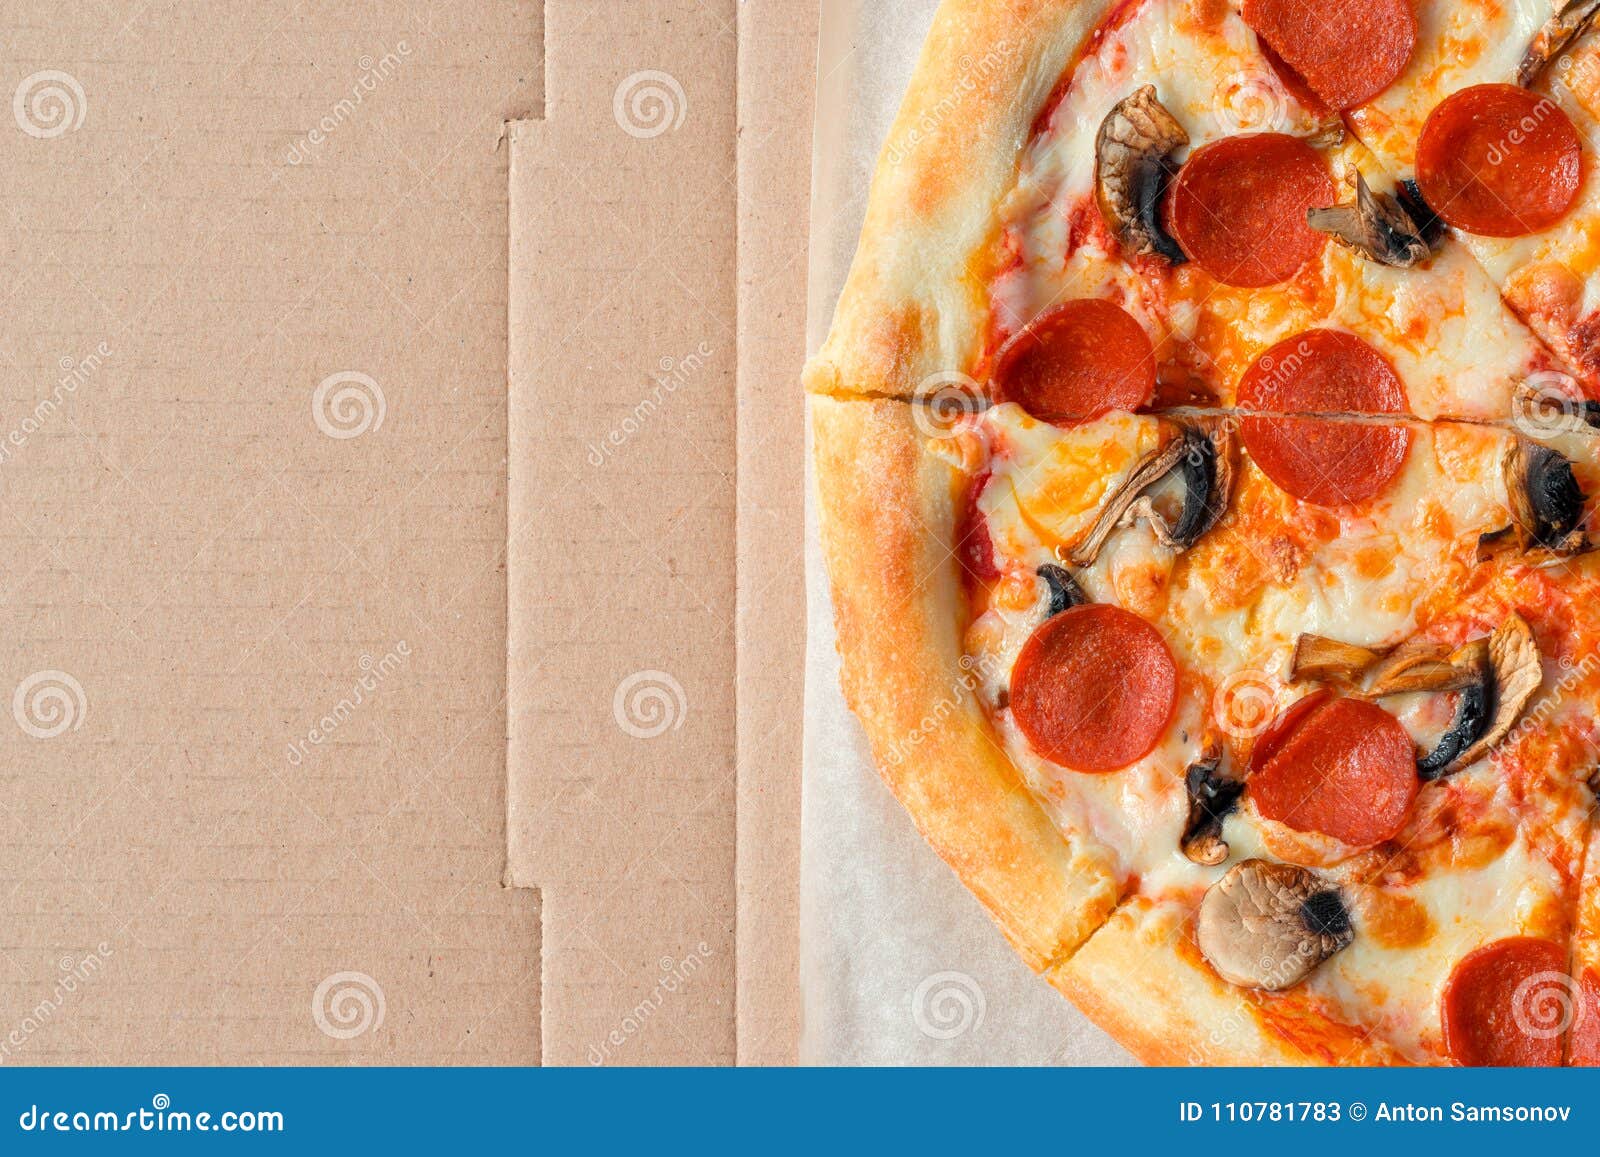 фото пиццы пепперони в коробке фото 10